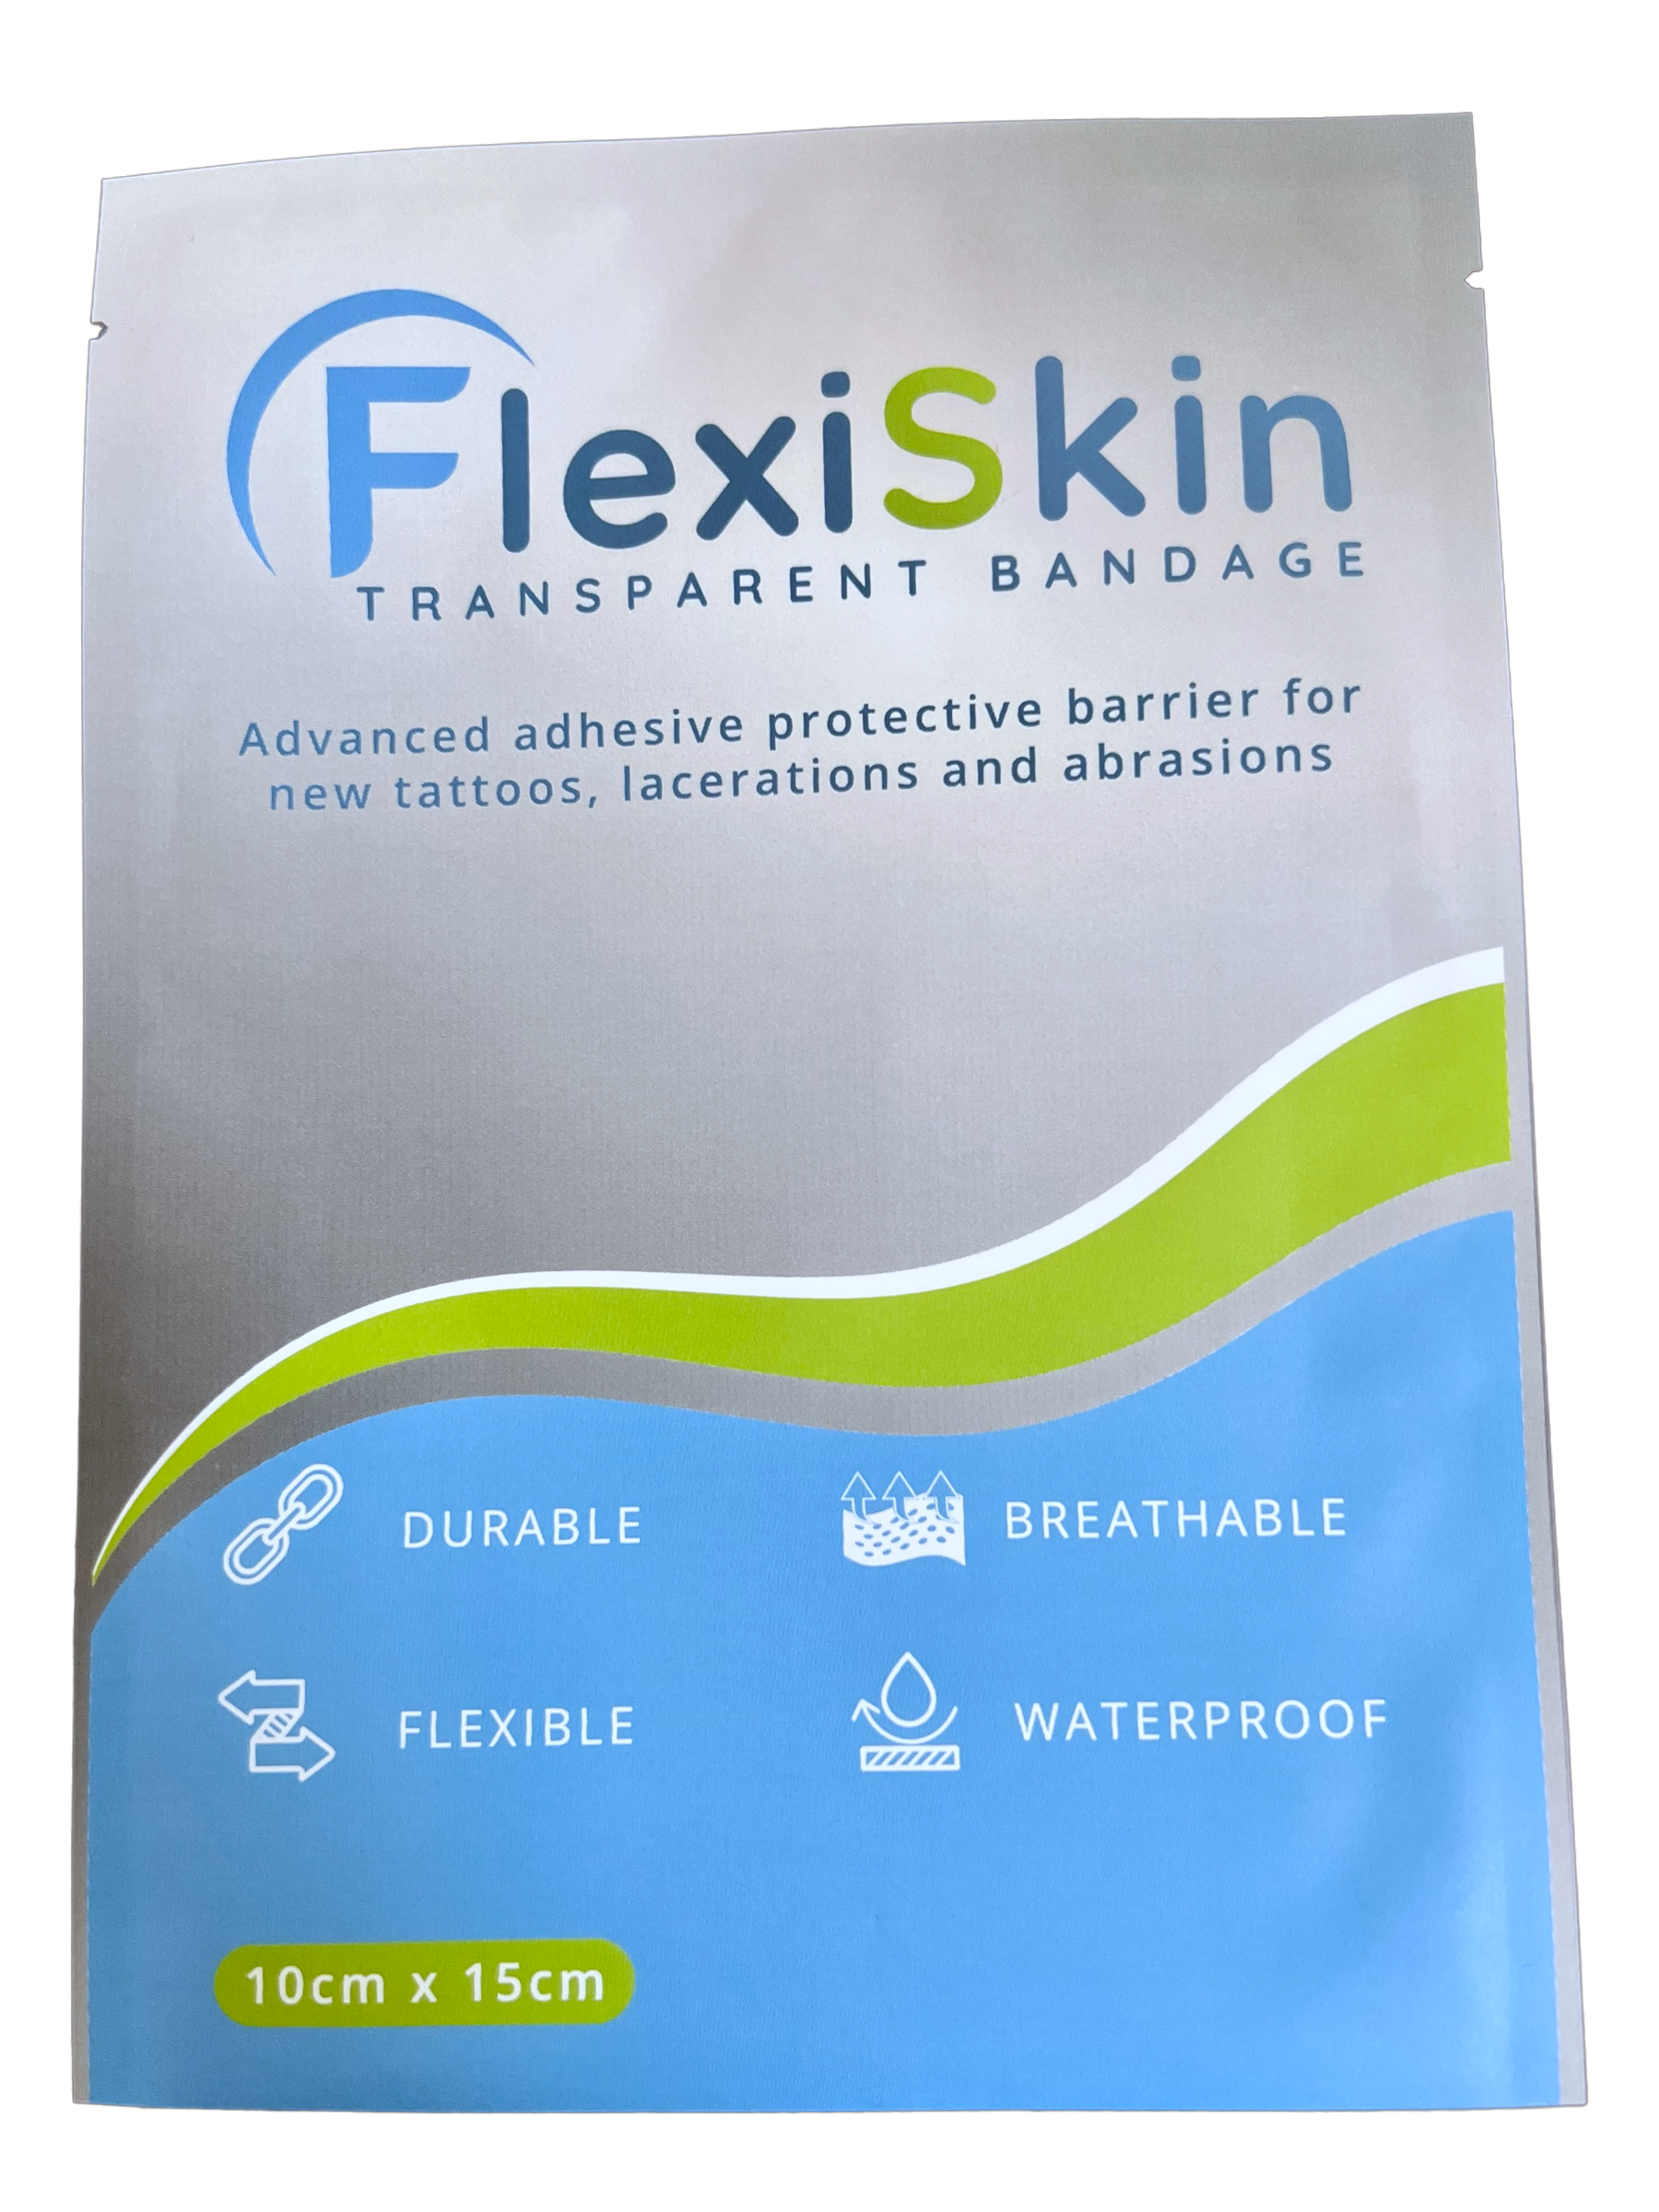 flexiskin medical tattoo transparent bandage sheet